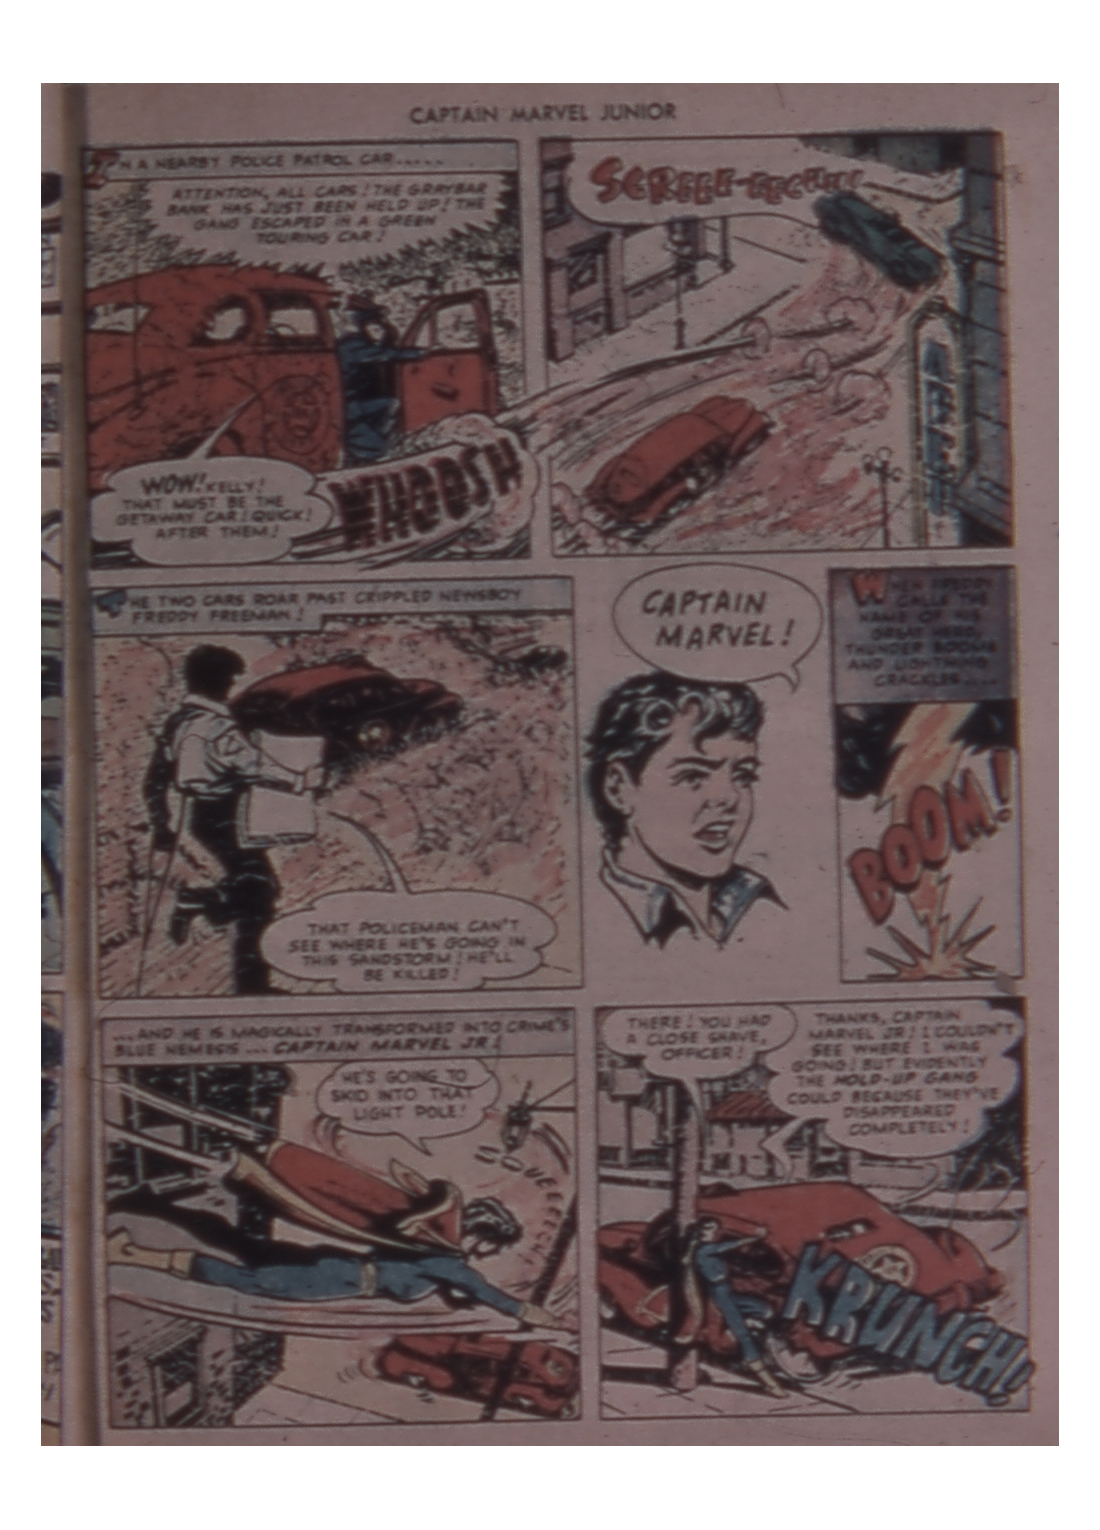 Read online Captain Marvel, Jr. comic -  Issue #80 - 41